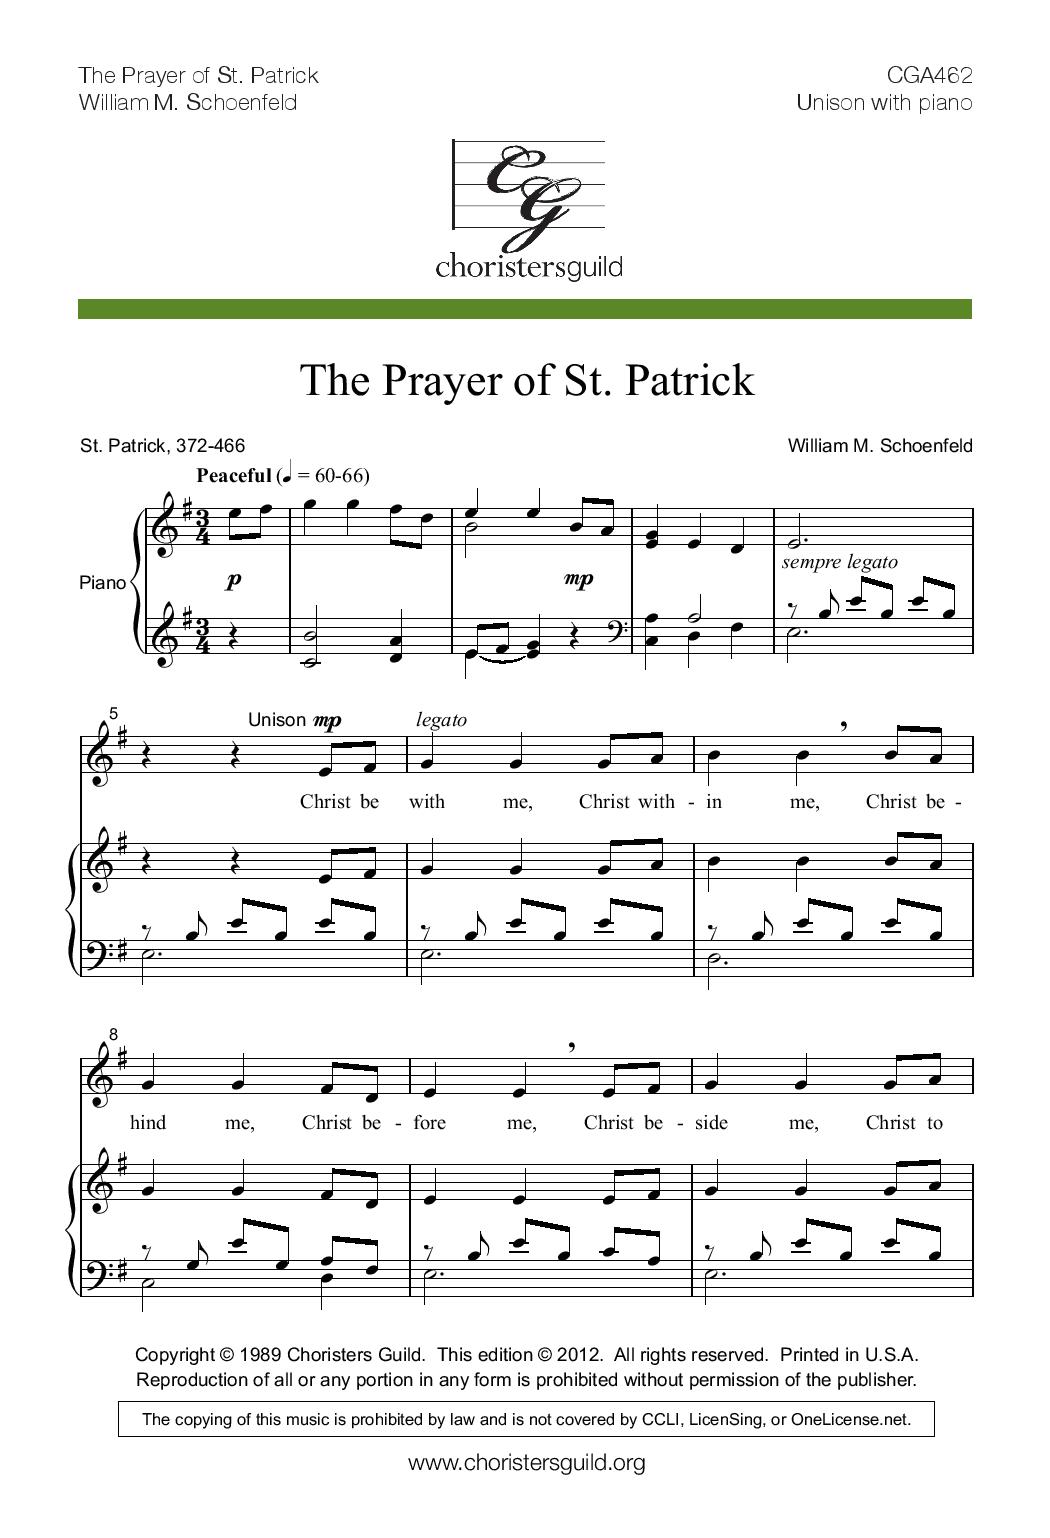 The Prayer of St Patrick